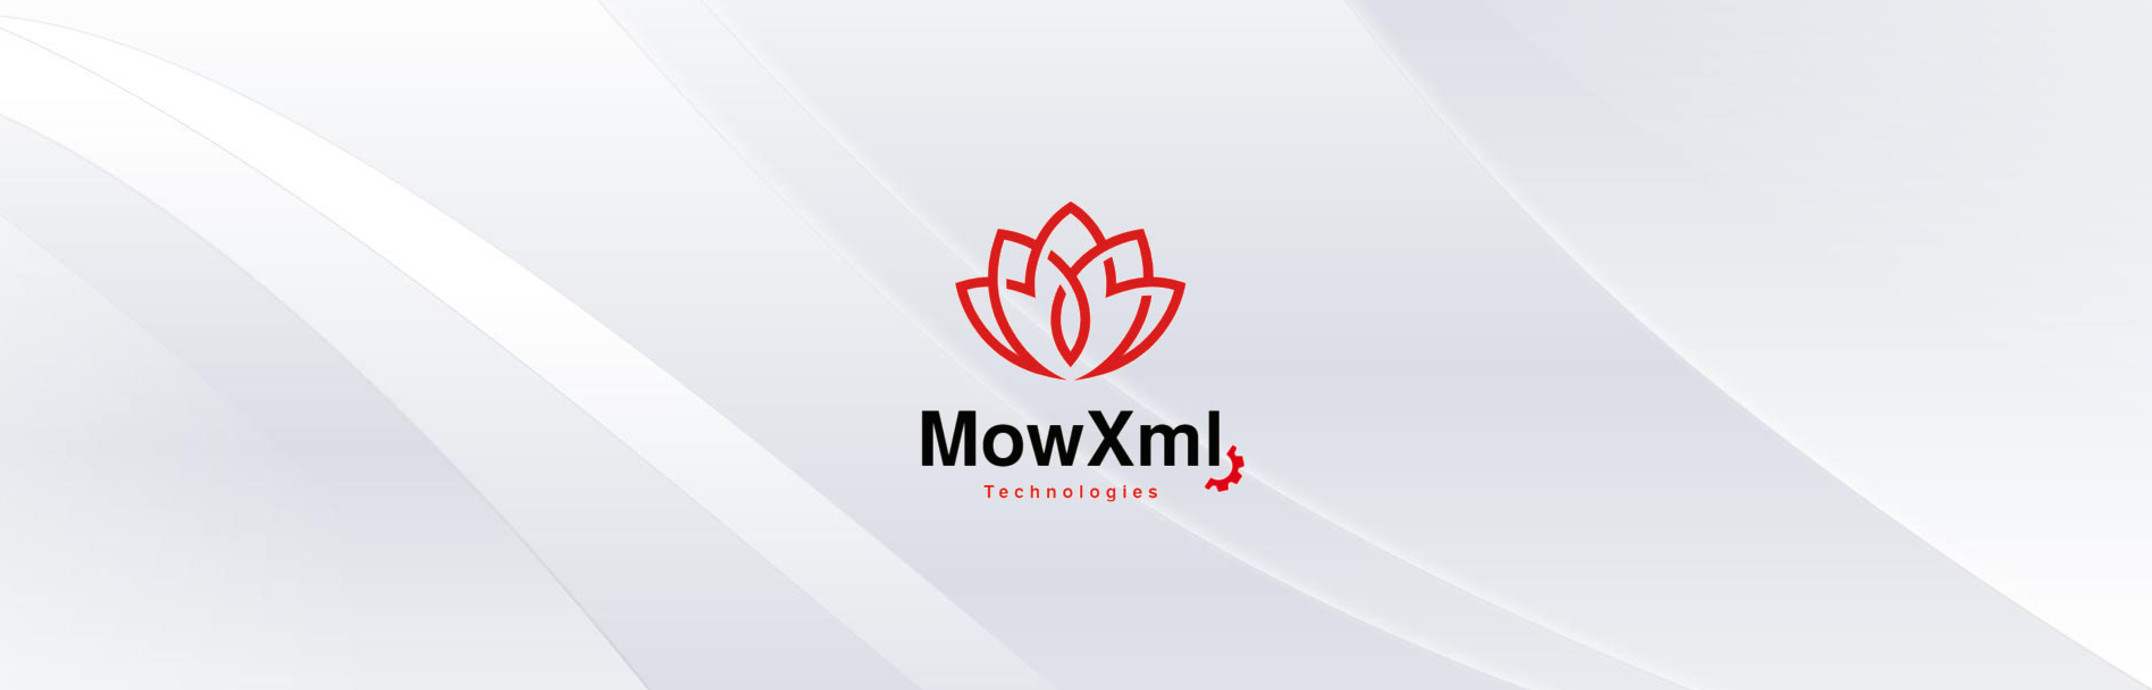 MowXml